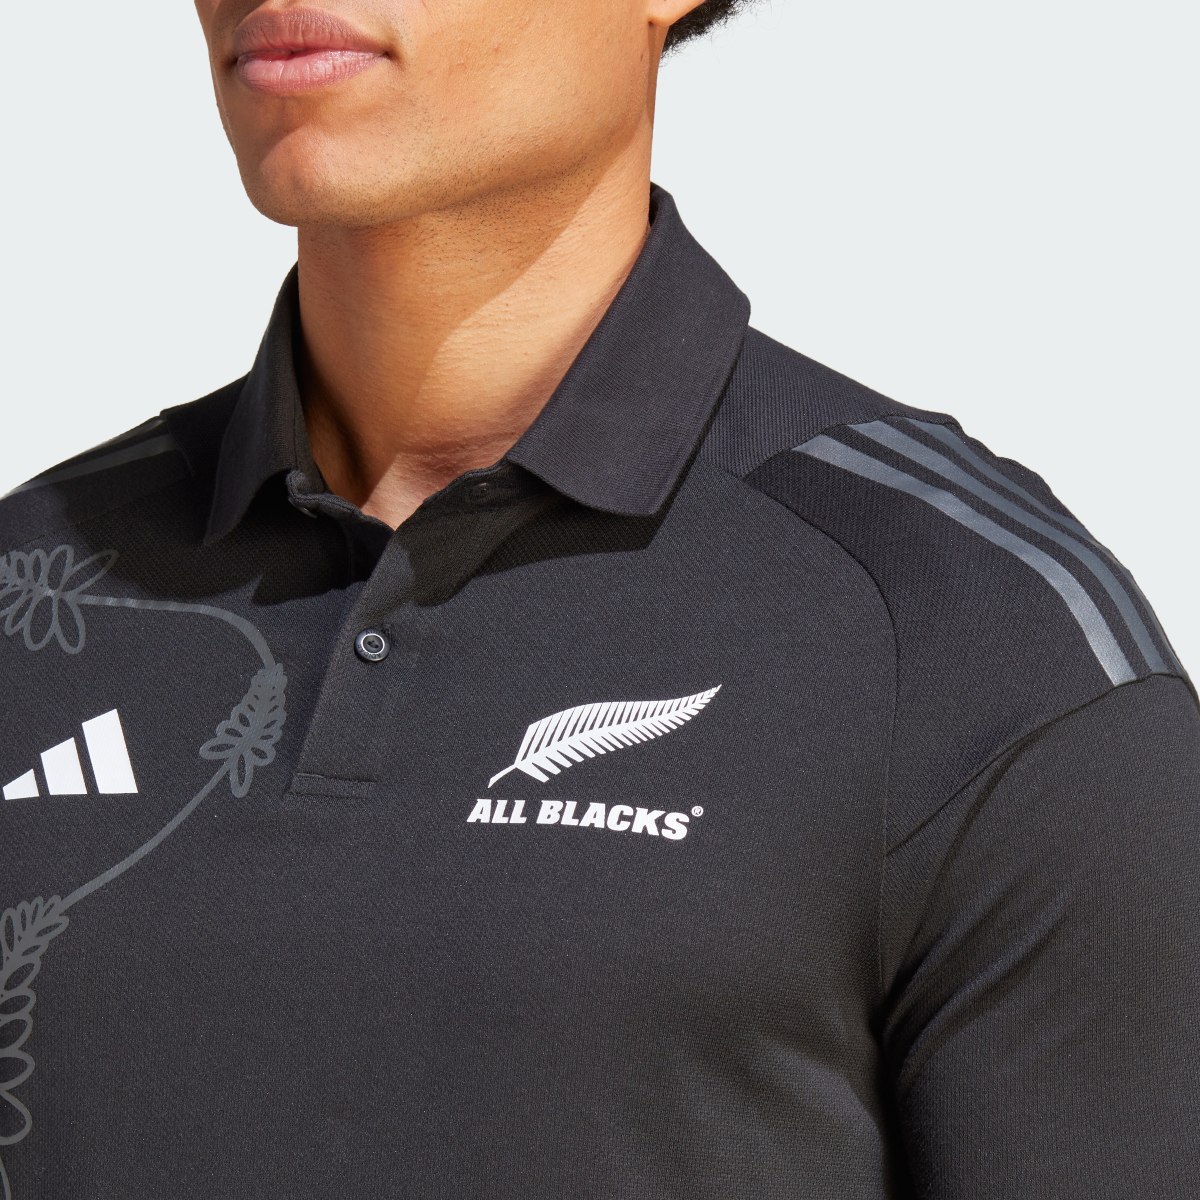 Adidas All Blacks Rugby Polo Shirt. 7